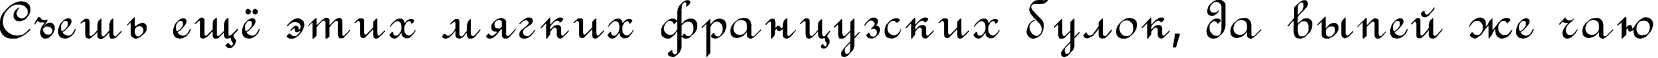 Пример написания шрифтом Rondo текста на русском